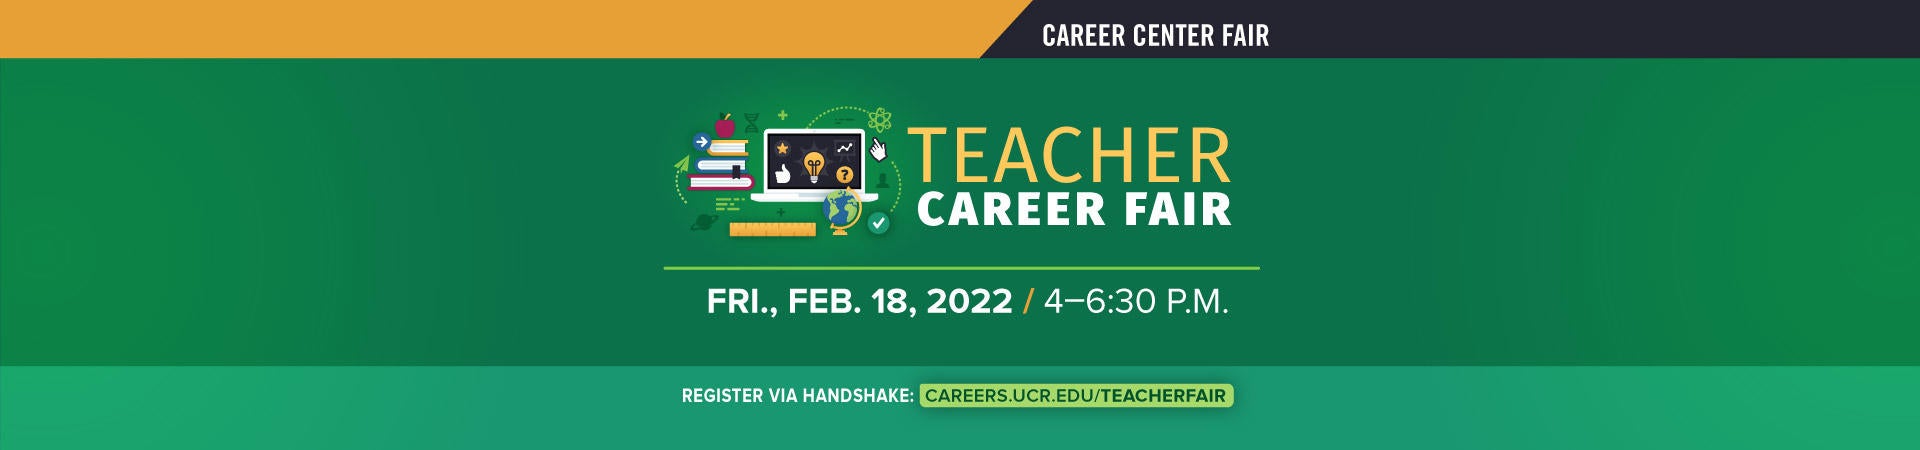 Teacher Career Fair, Fri., Feb. 18, 2022, 4-6:30 p.m.